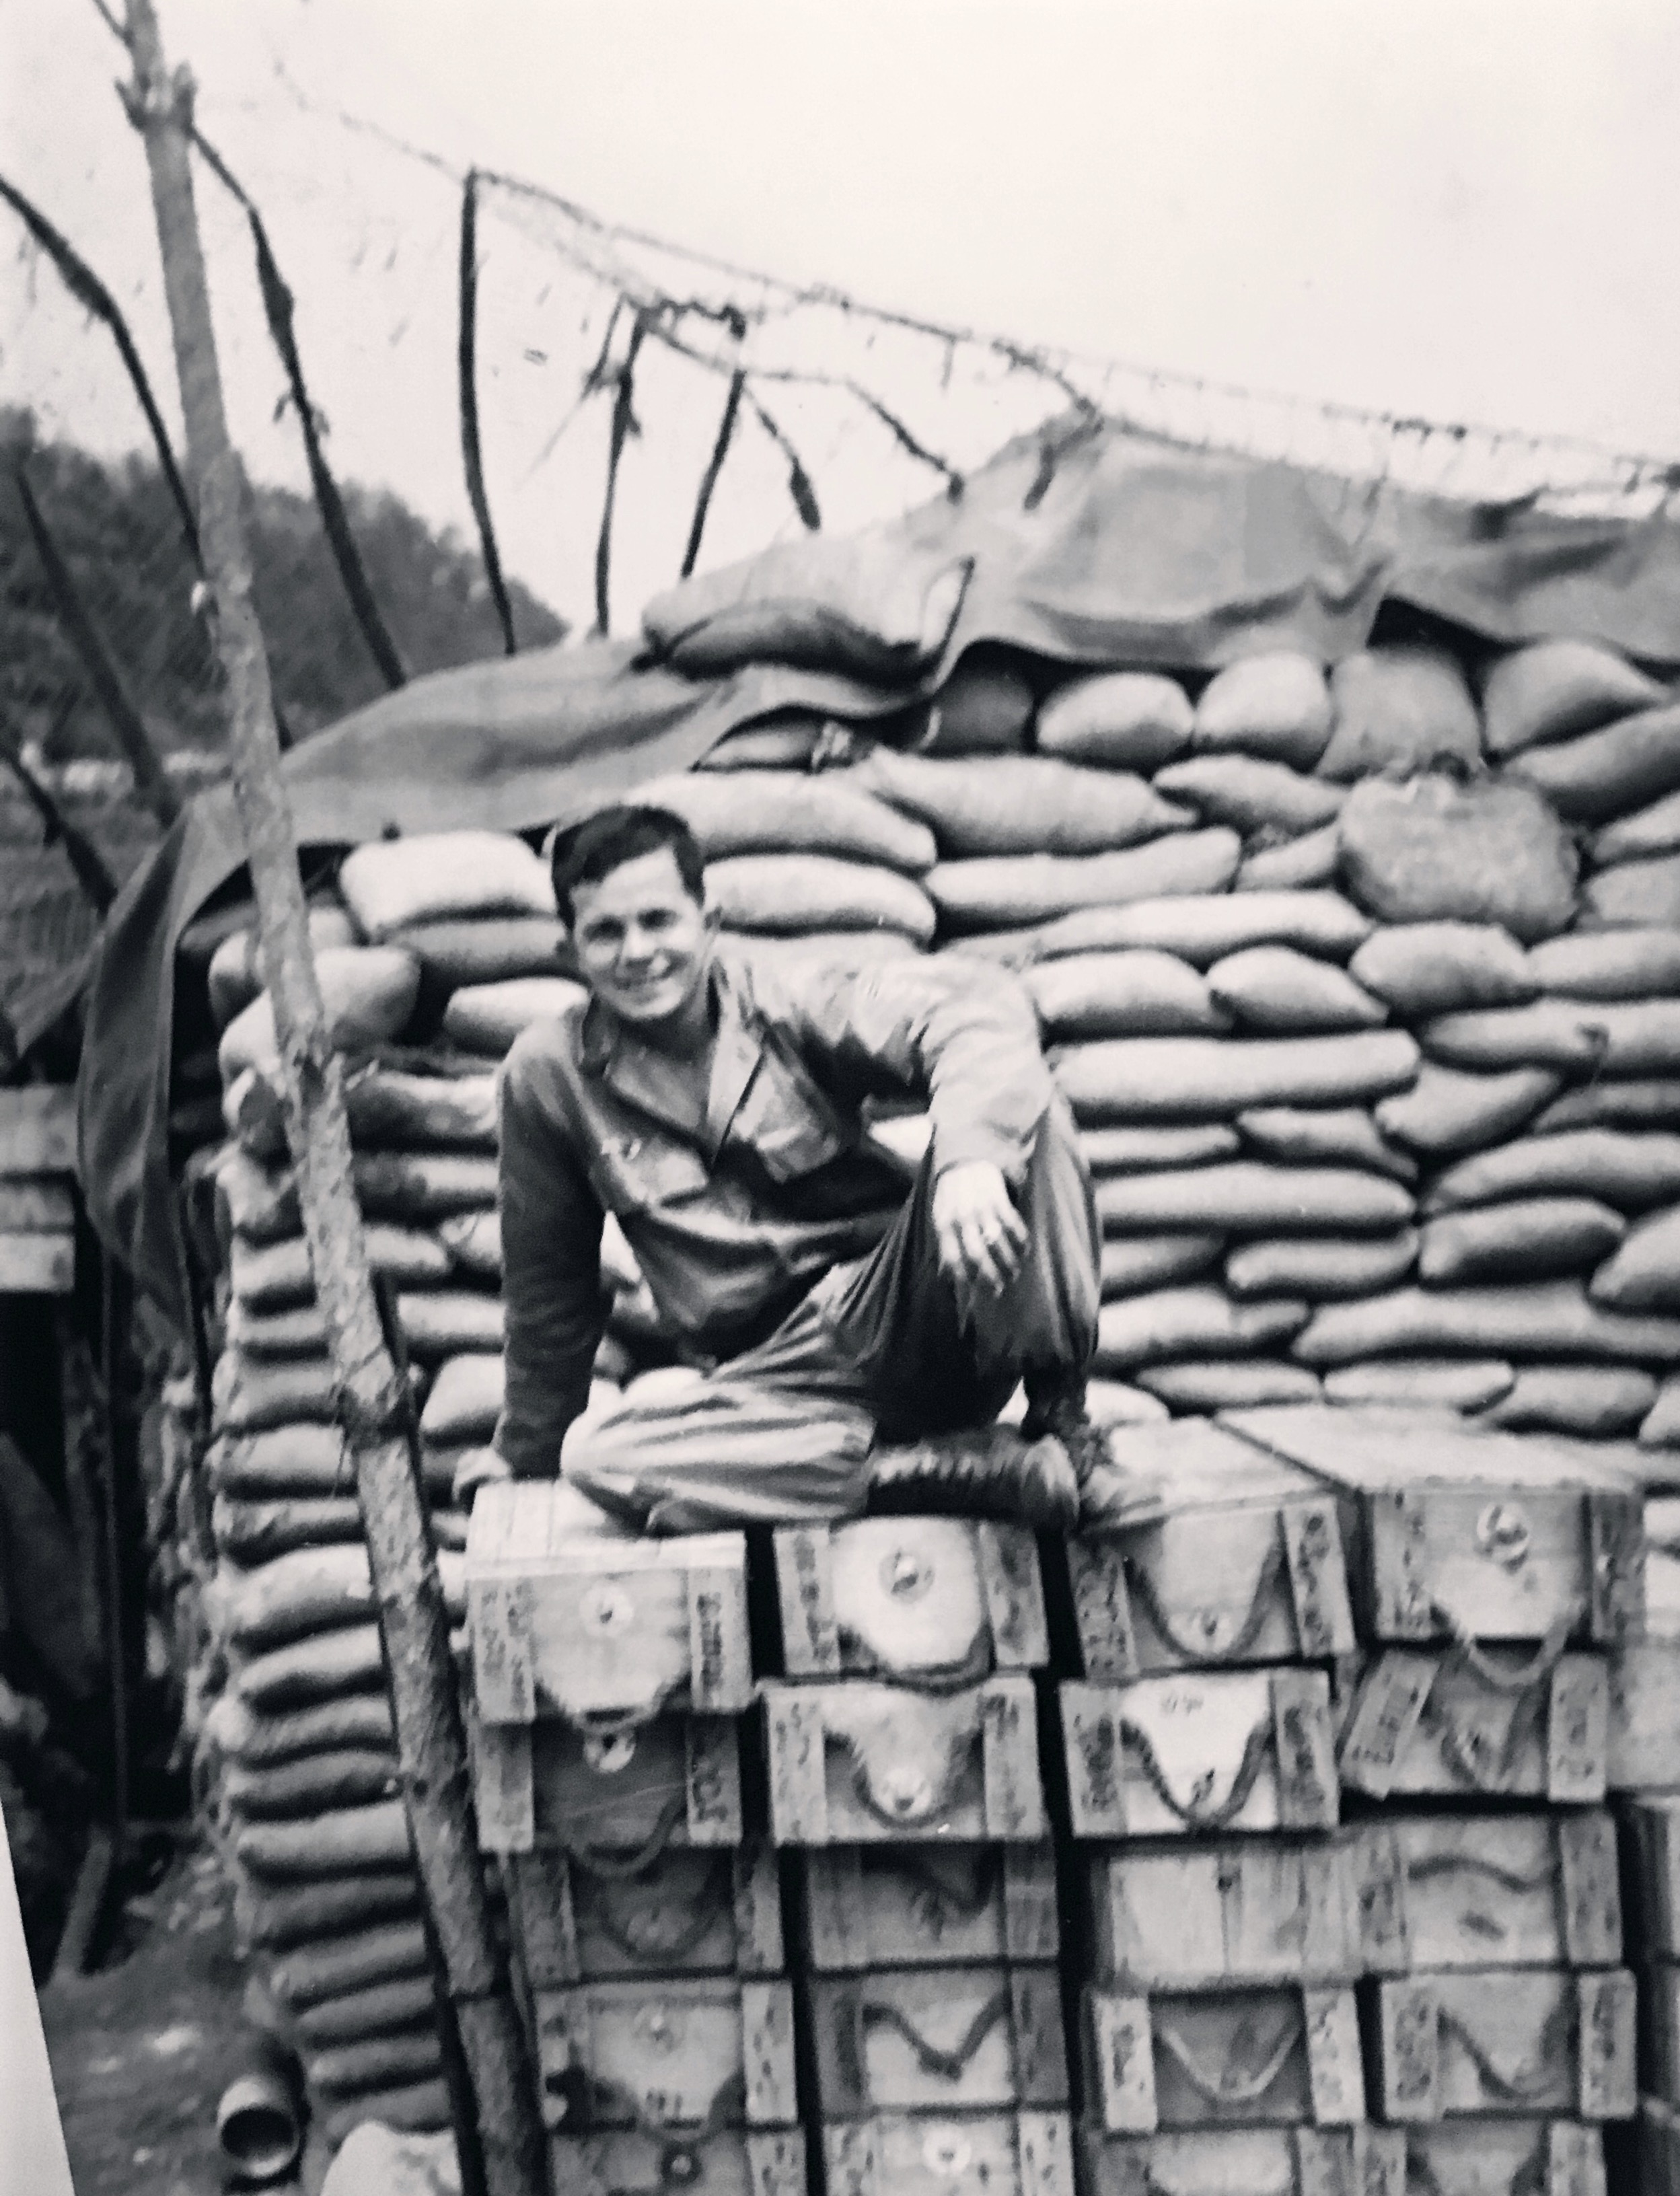 My grandpa at Korea War. 7th Infantry Division. 1950's